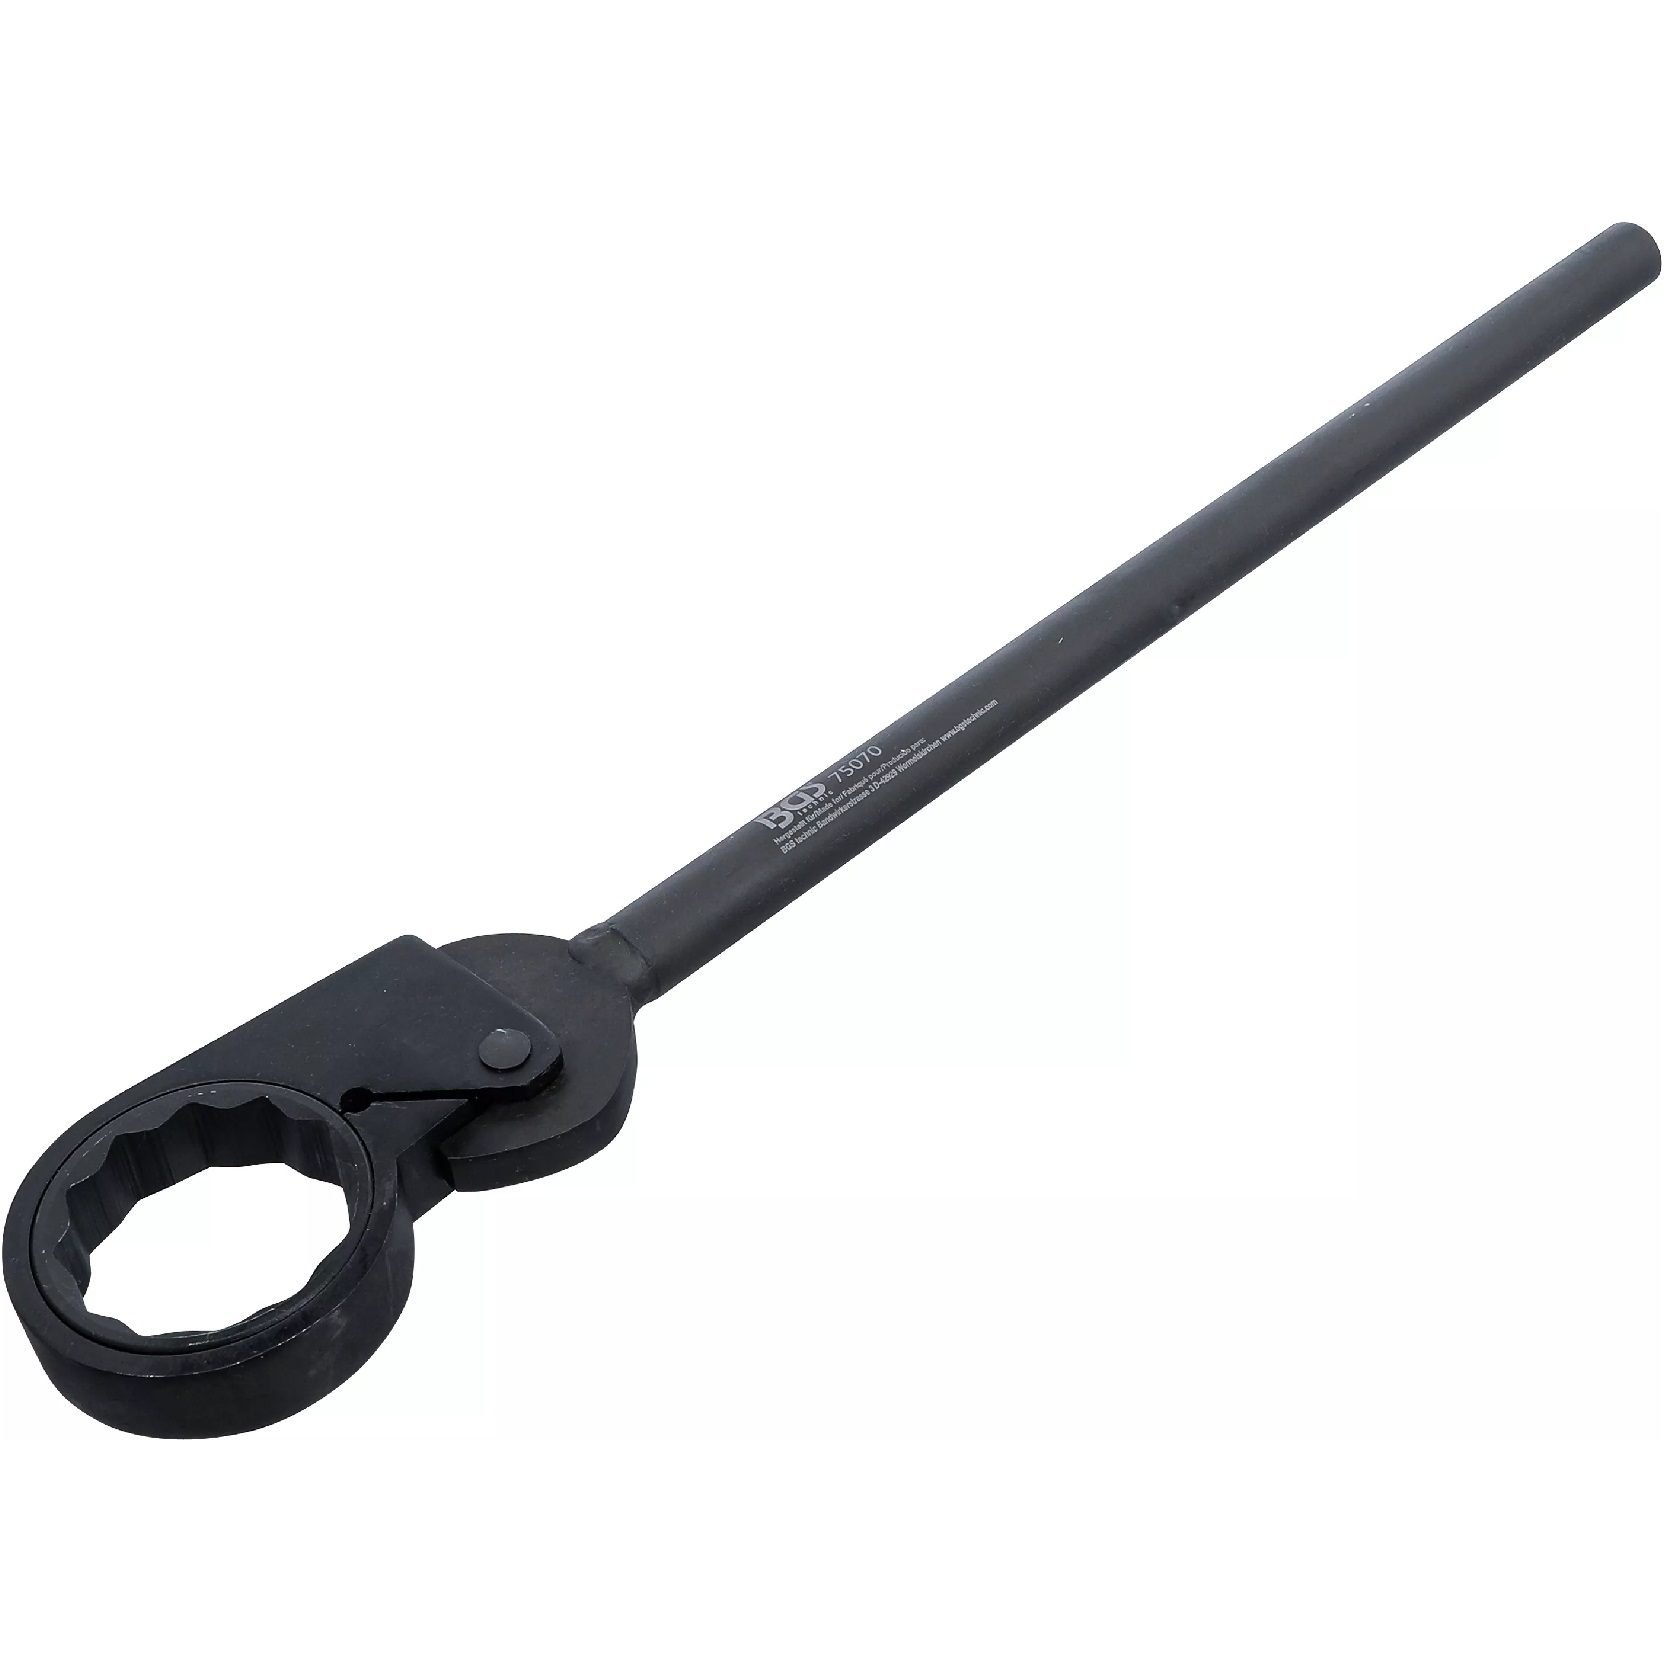 Kľúč voľnobežný, 70 mm, BGS 1075070